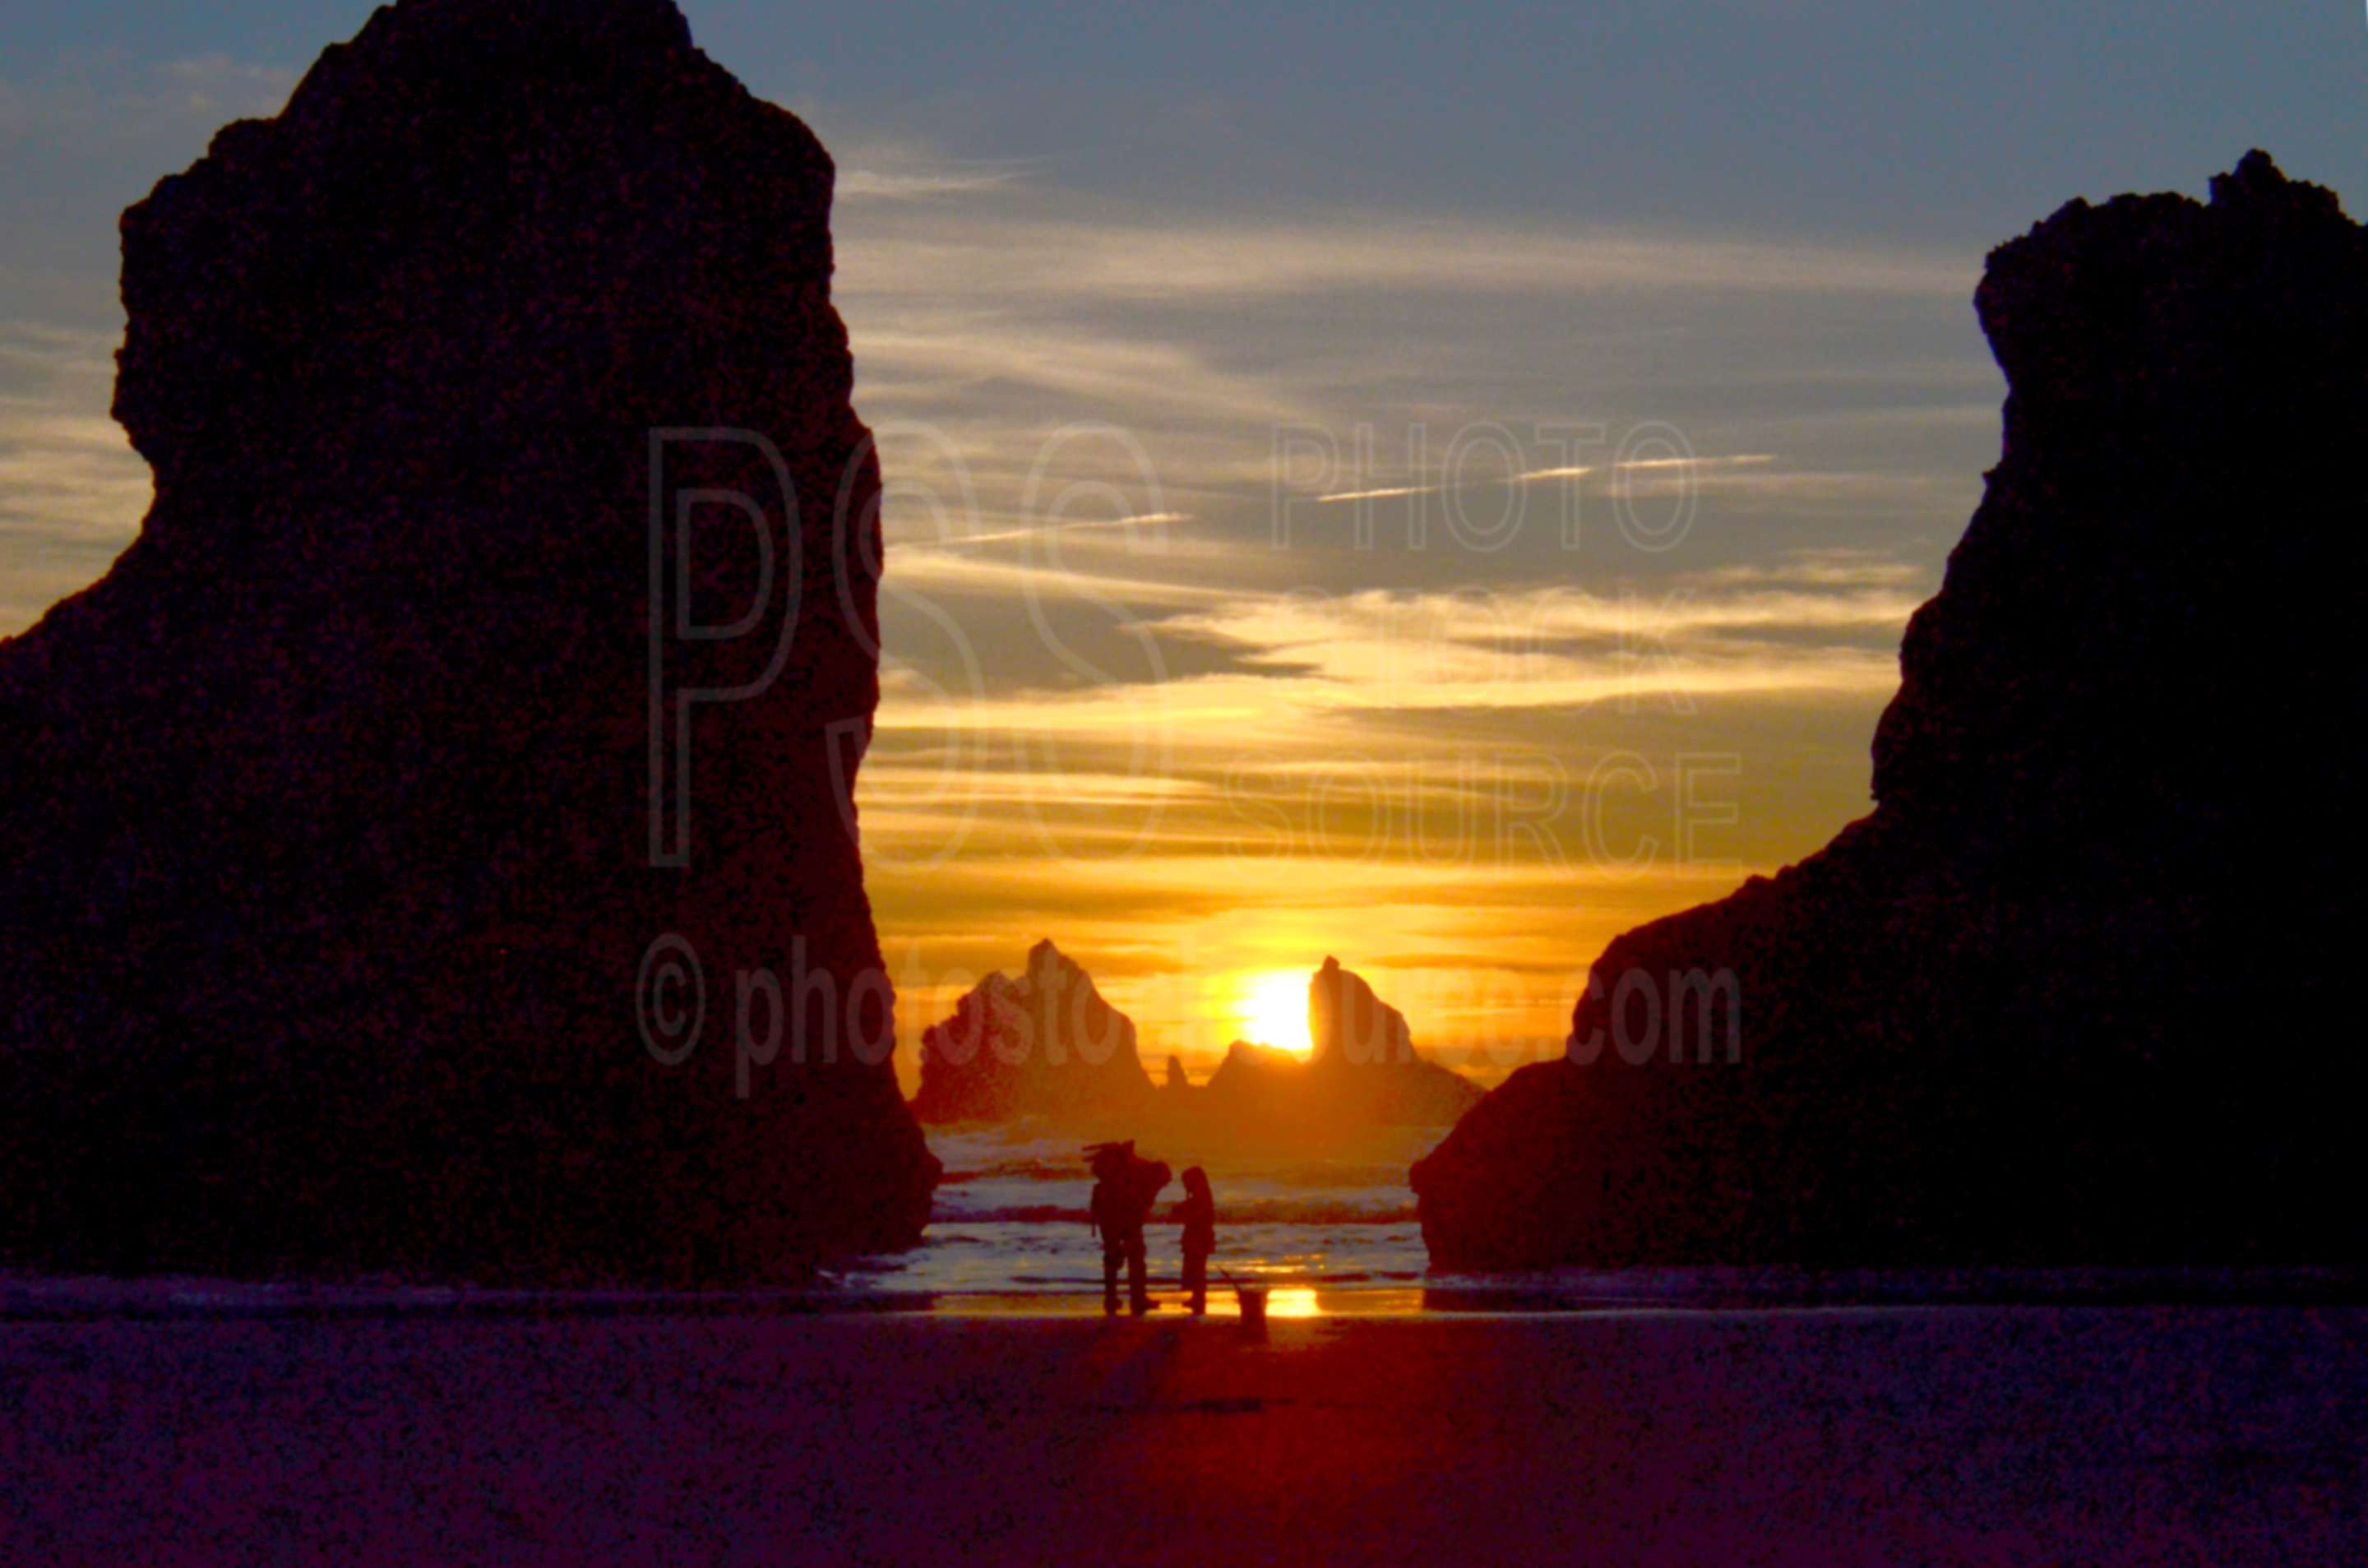 Sea Stacks at Sunset,sea stack,rock,beach,sunset,man